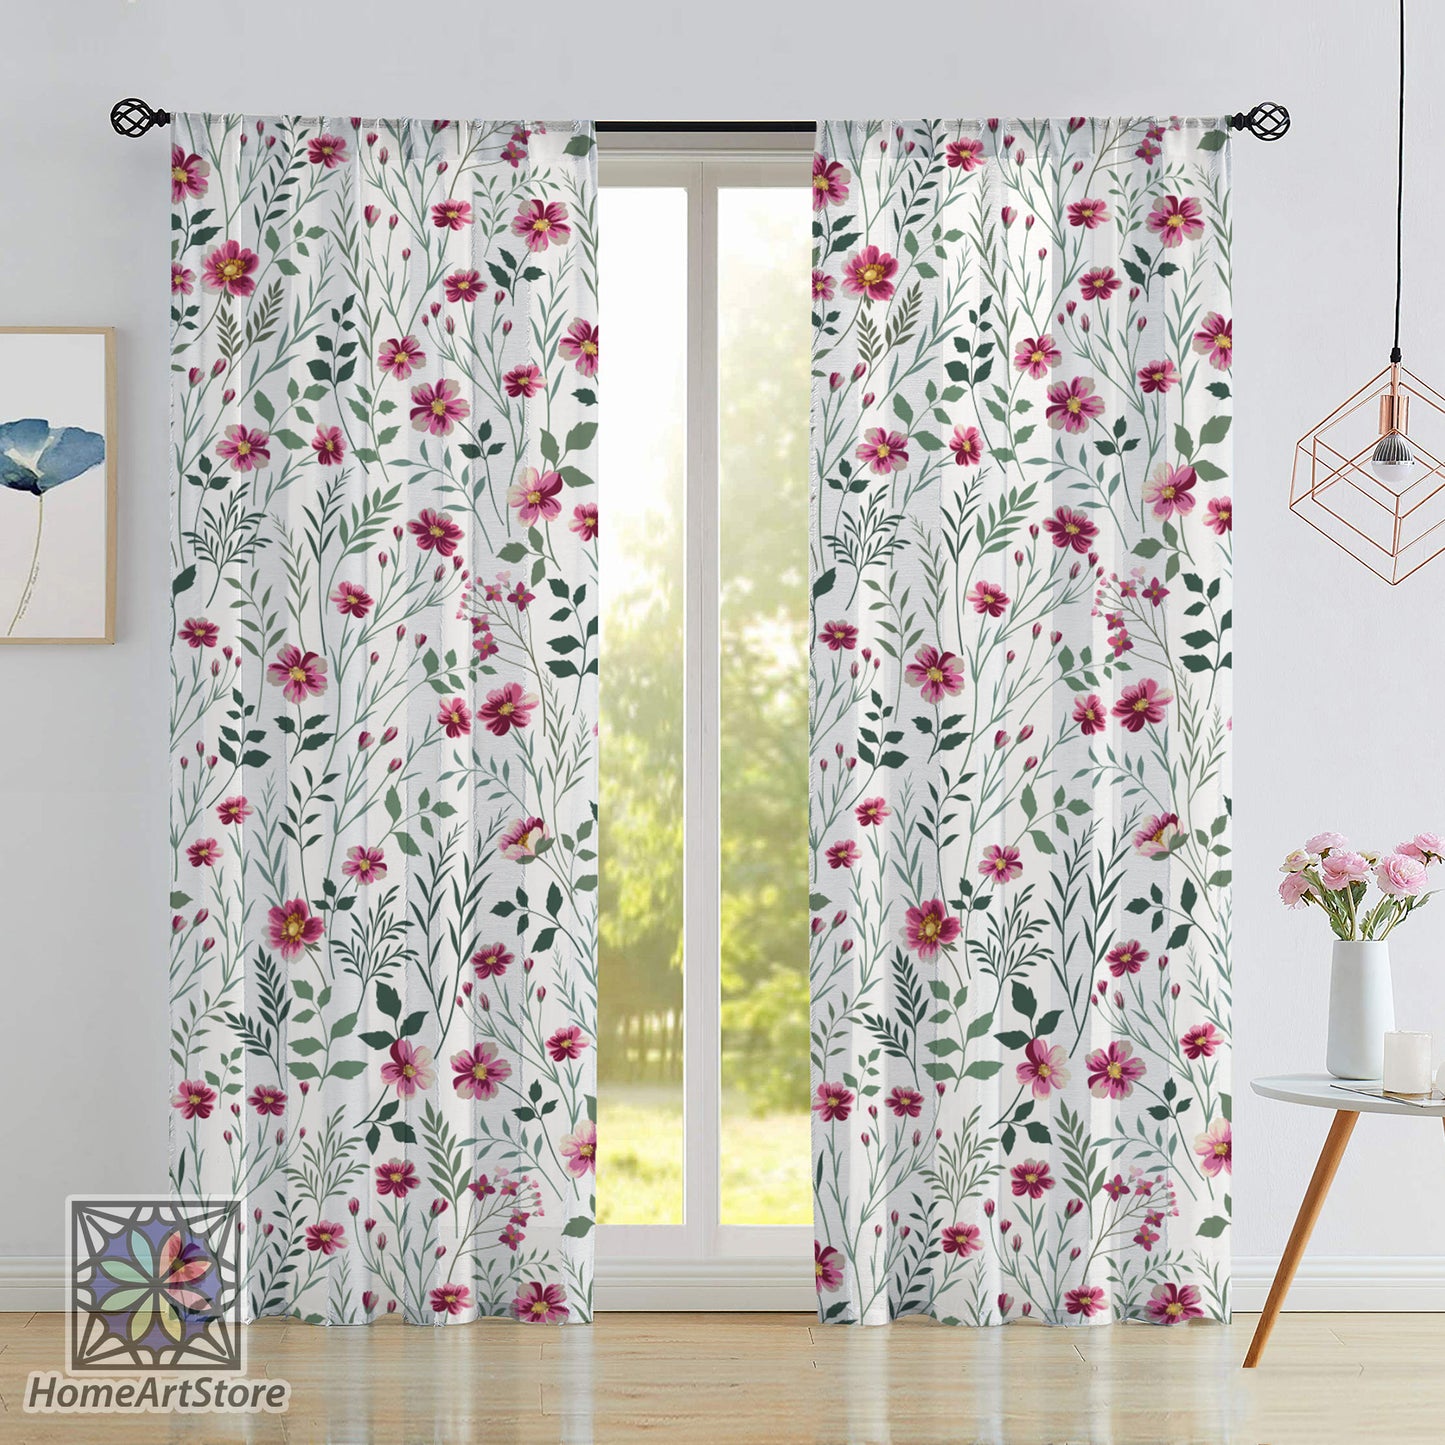 Meadow Flower Curtain, Living Room Curtain, Blackout Curtain, Kids Room Curtain, Floral Curtain